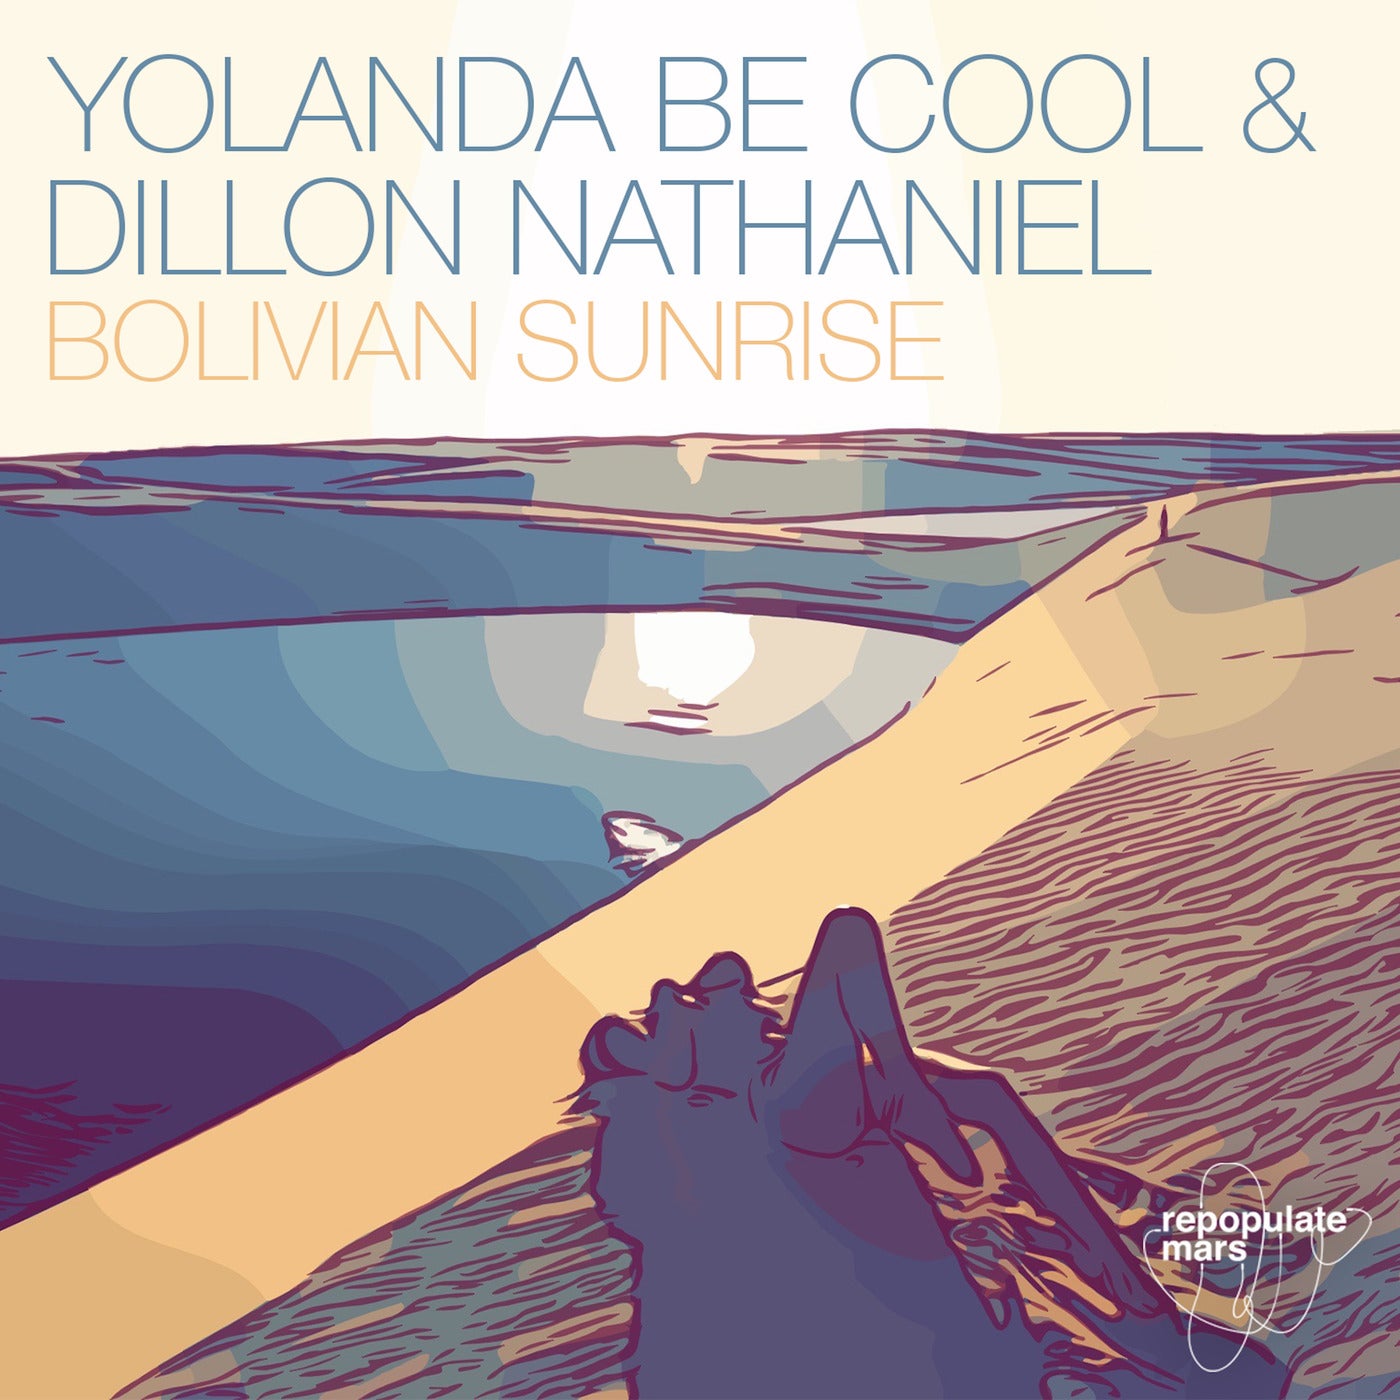 Yolanda Be Cool, Dillon Nathaniel - Bolivian Sunrise [RPM111]